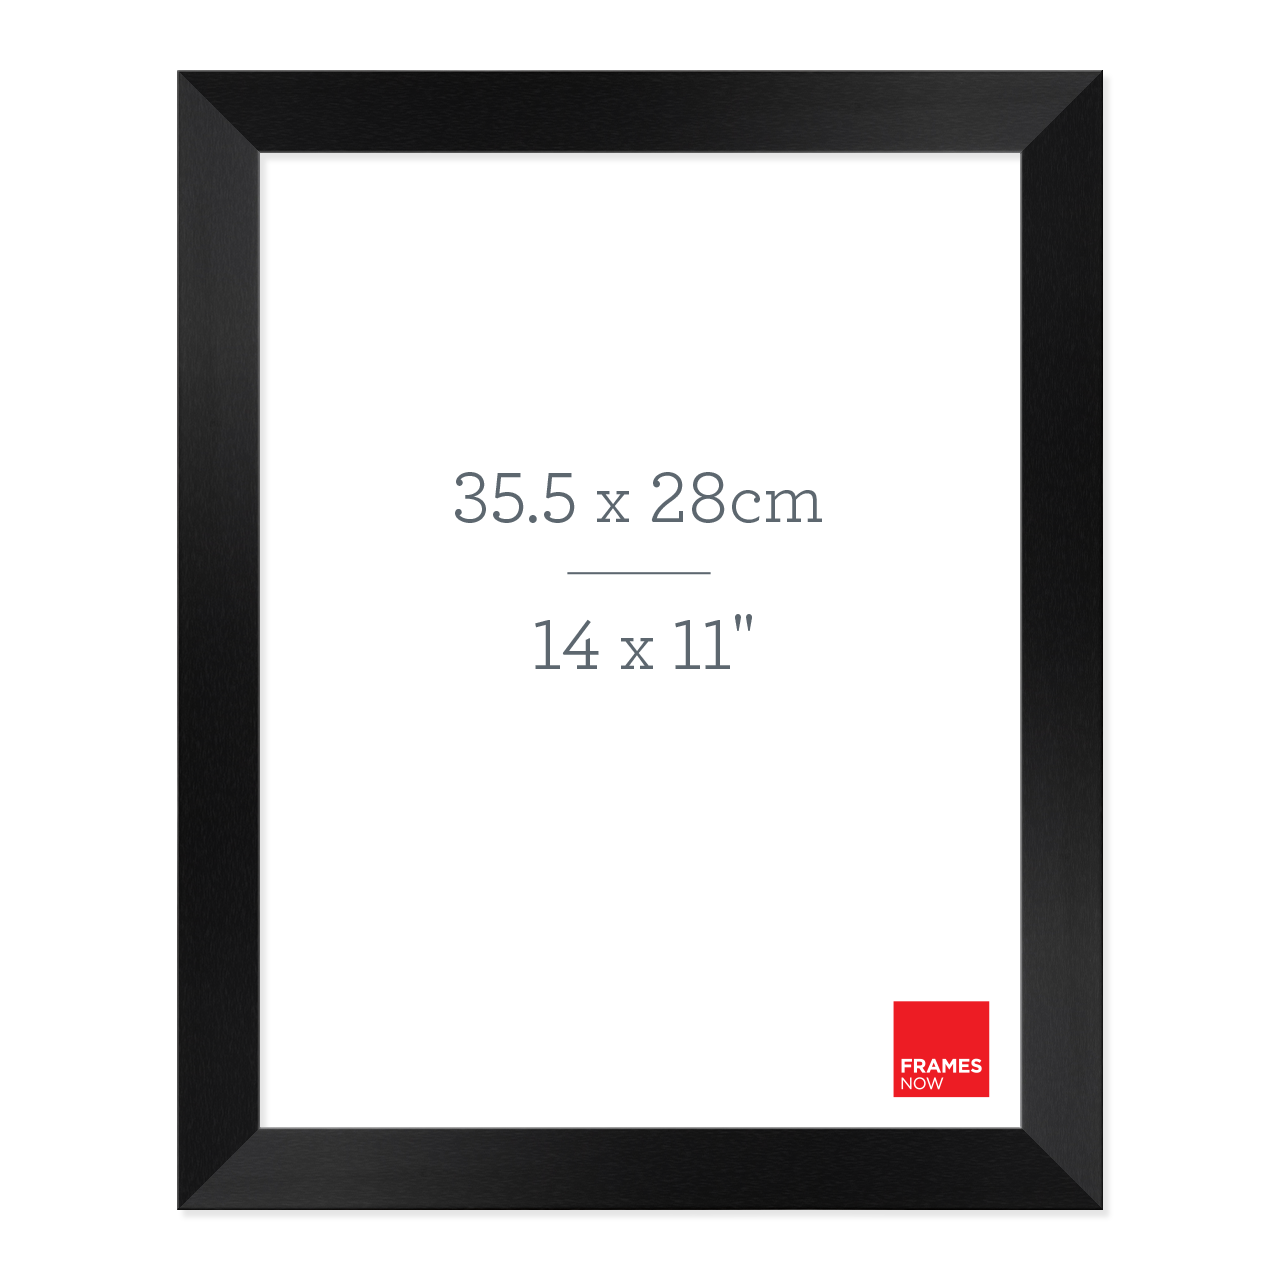 Premium Black Timber Finish Picture Frame for 35.5 x 28cm Artwork